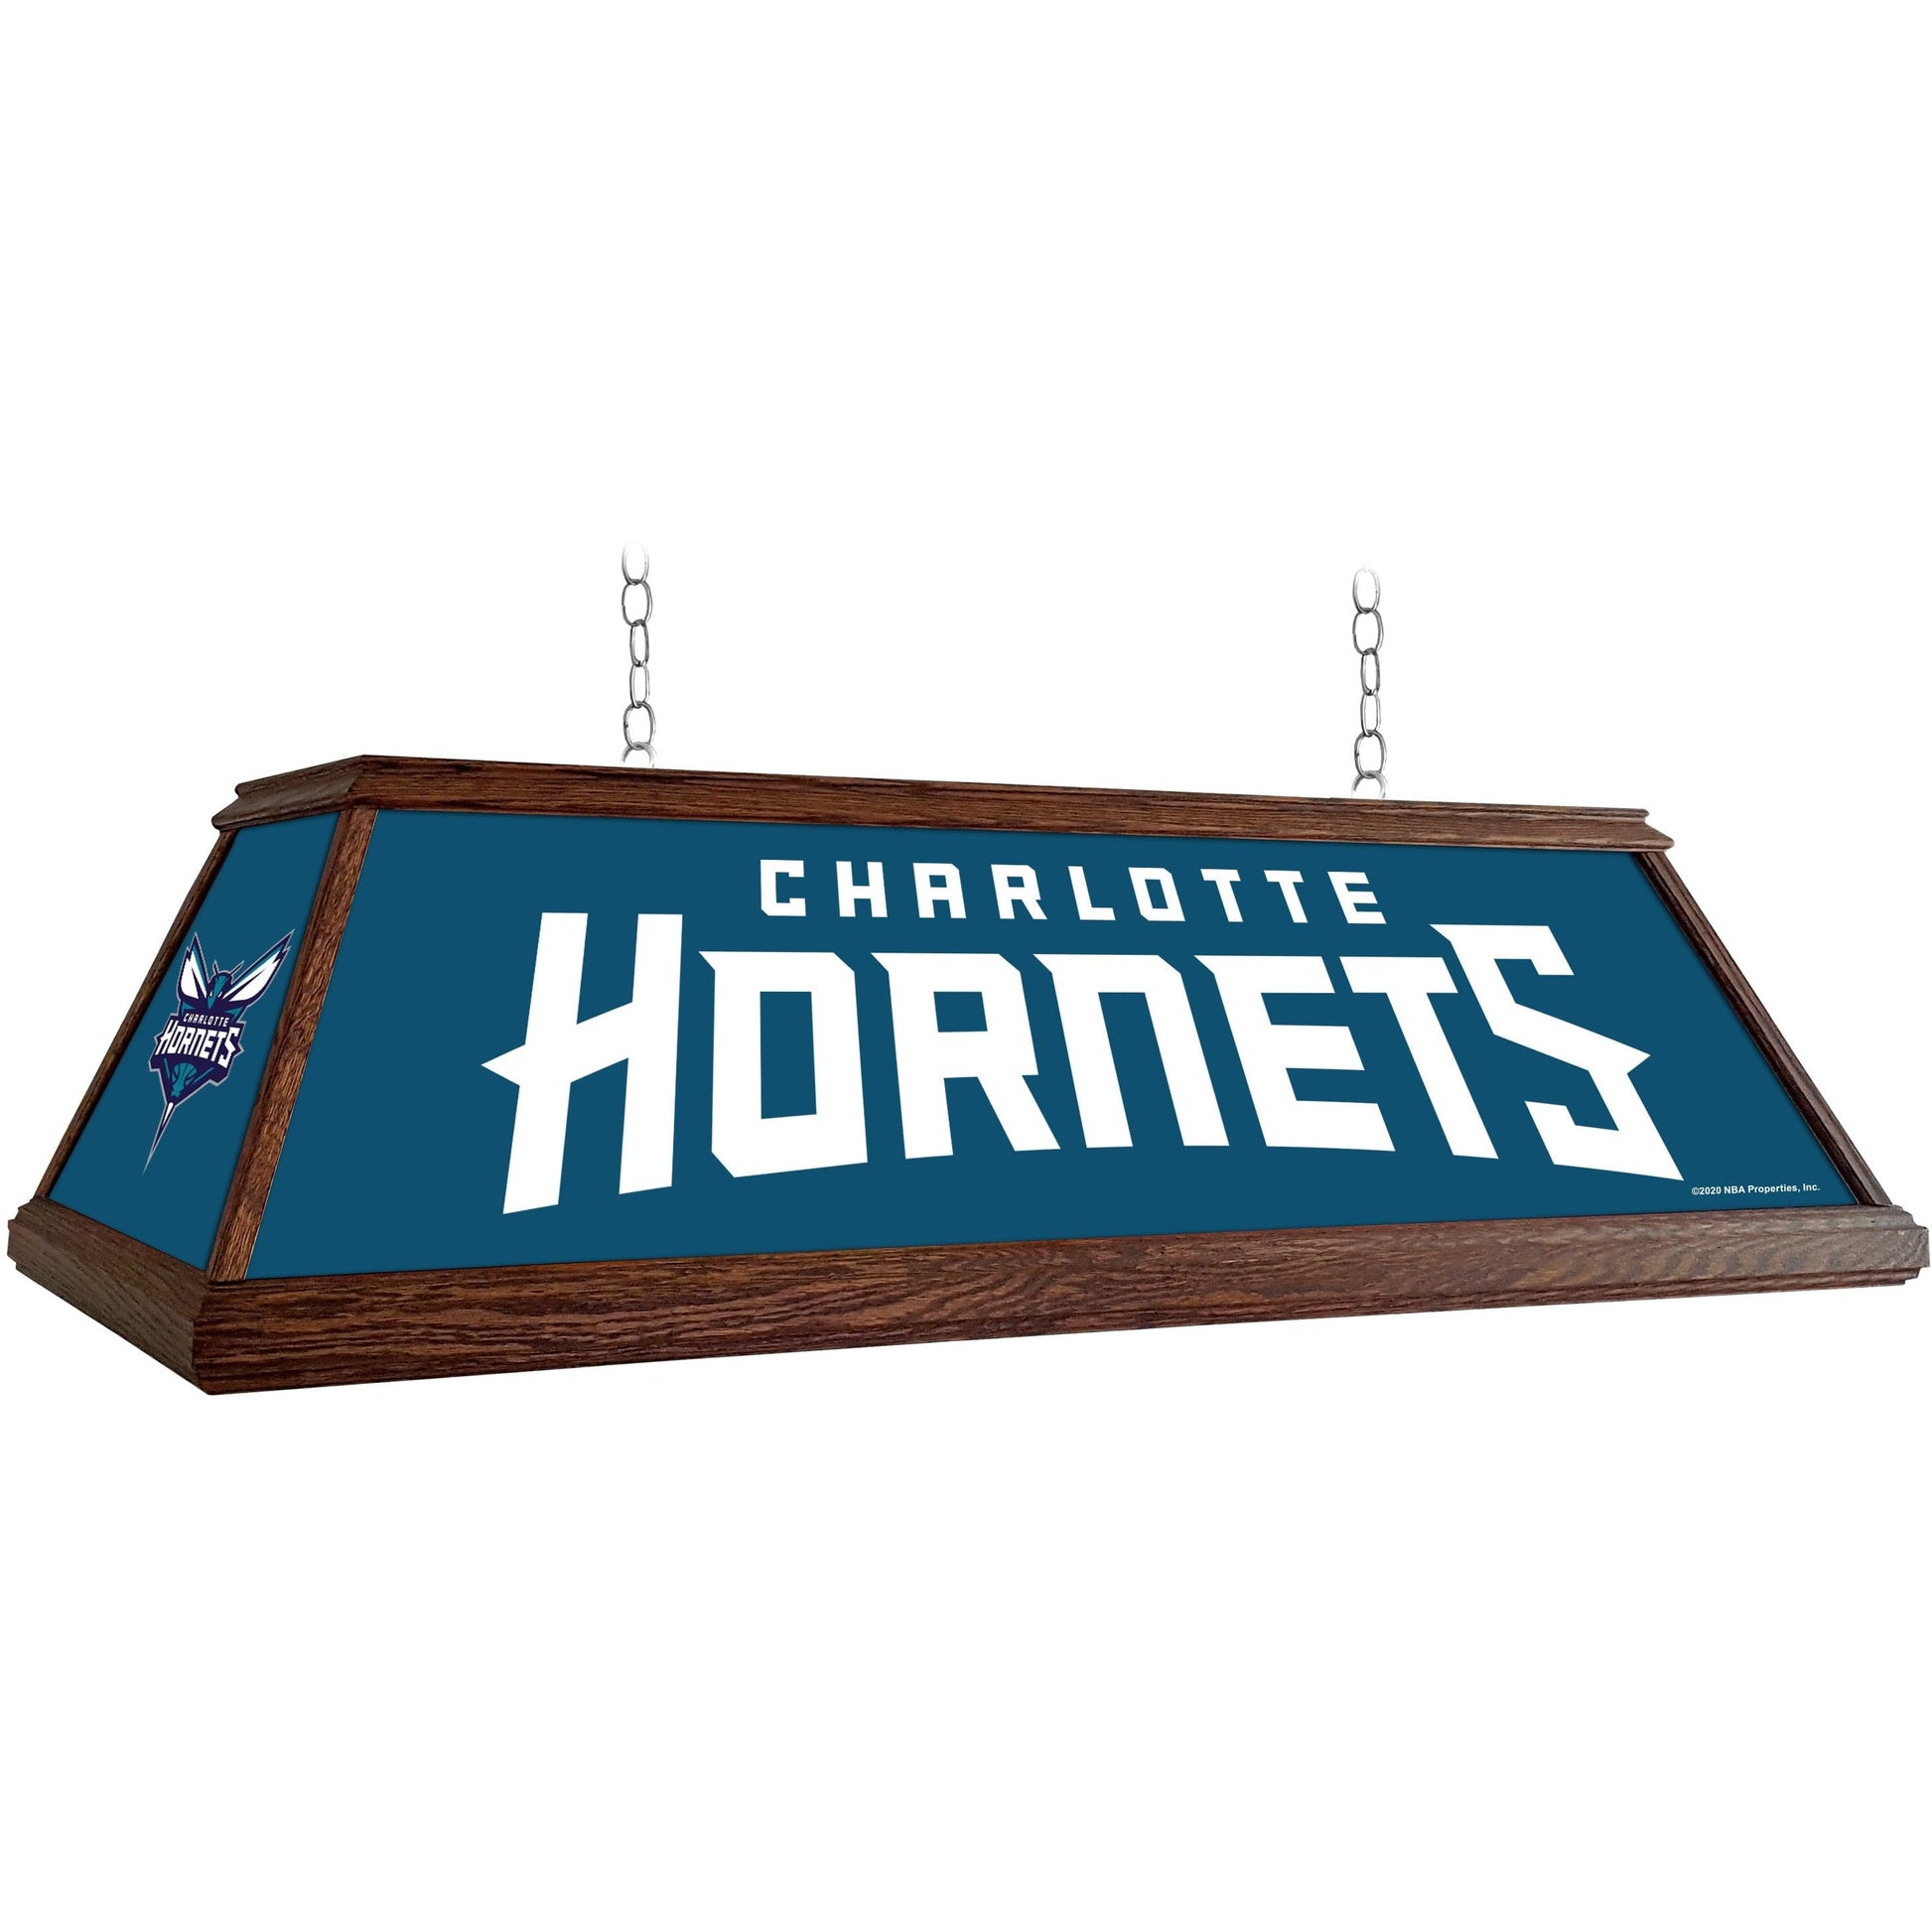 Charlotte Hornets: Premium Wood Pool Table Light - The Fan-Brand